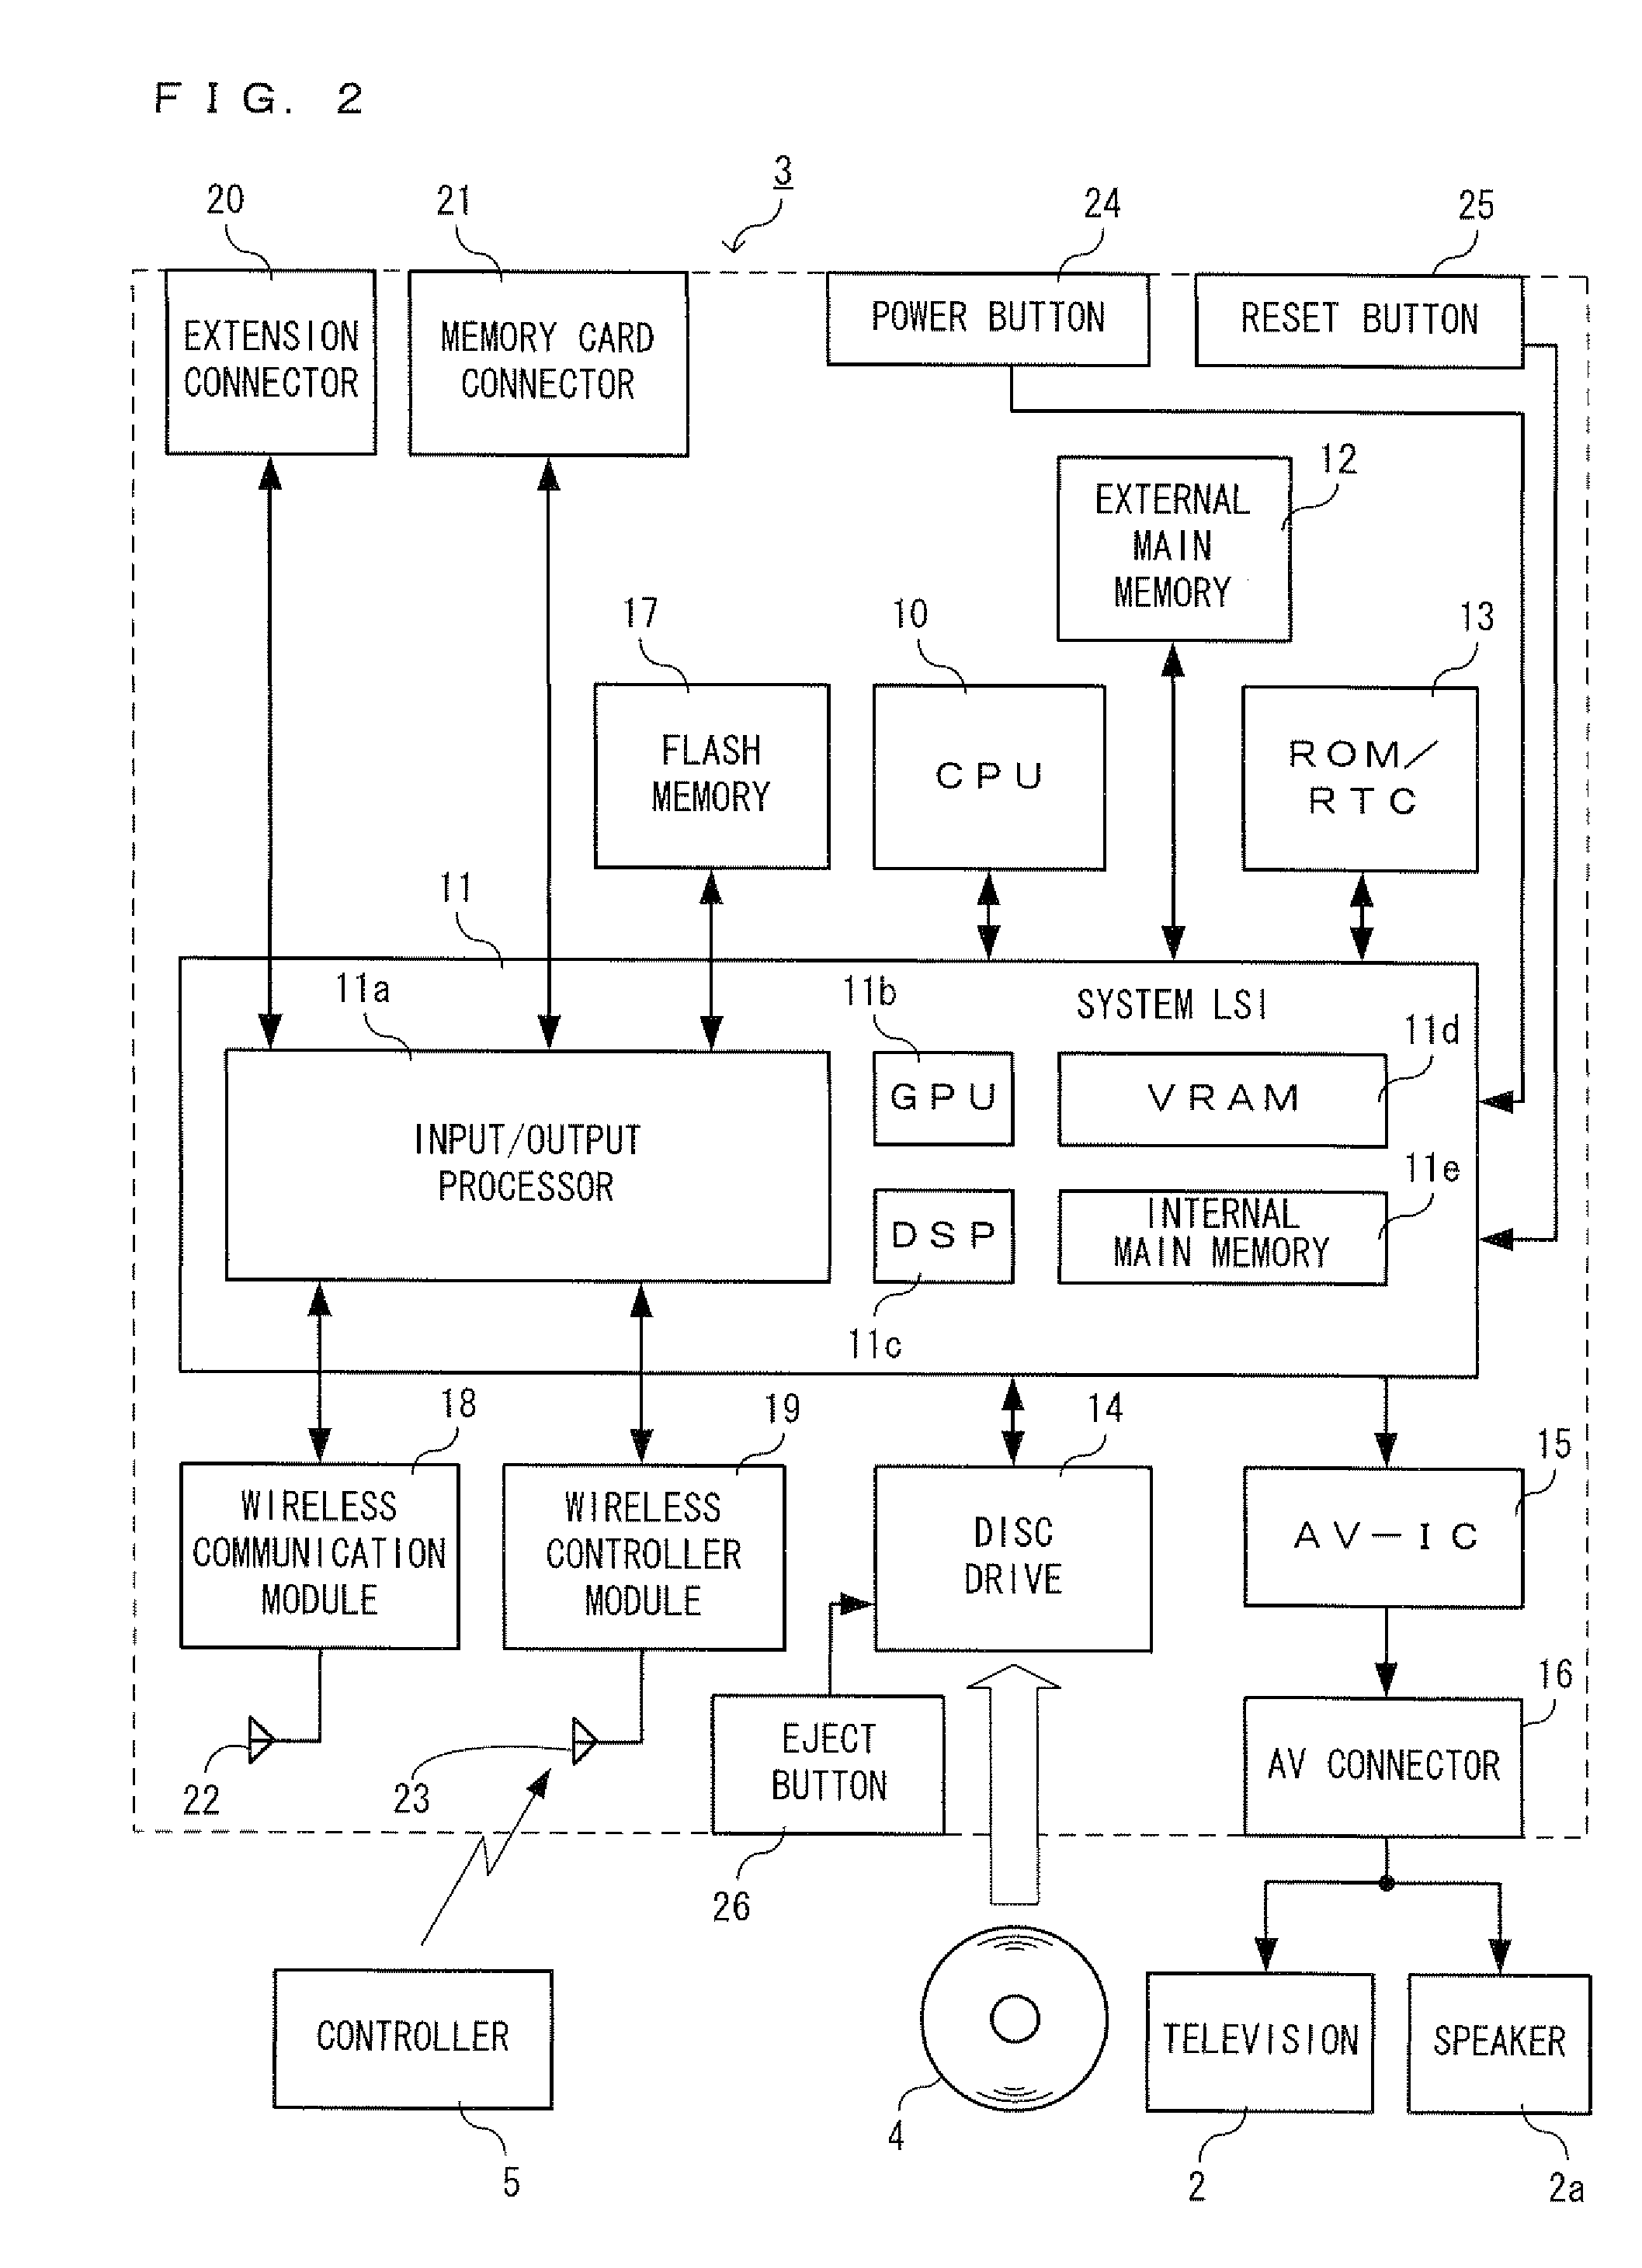 Computer-readable storage medium storing information processing program and information processing apparatus